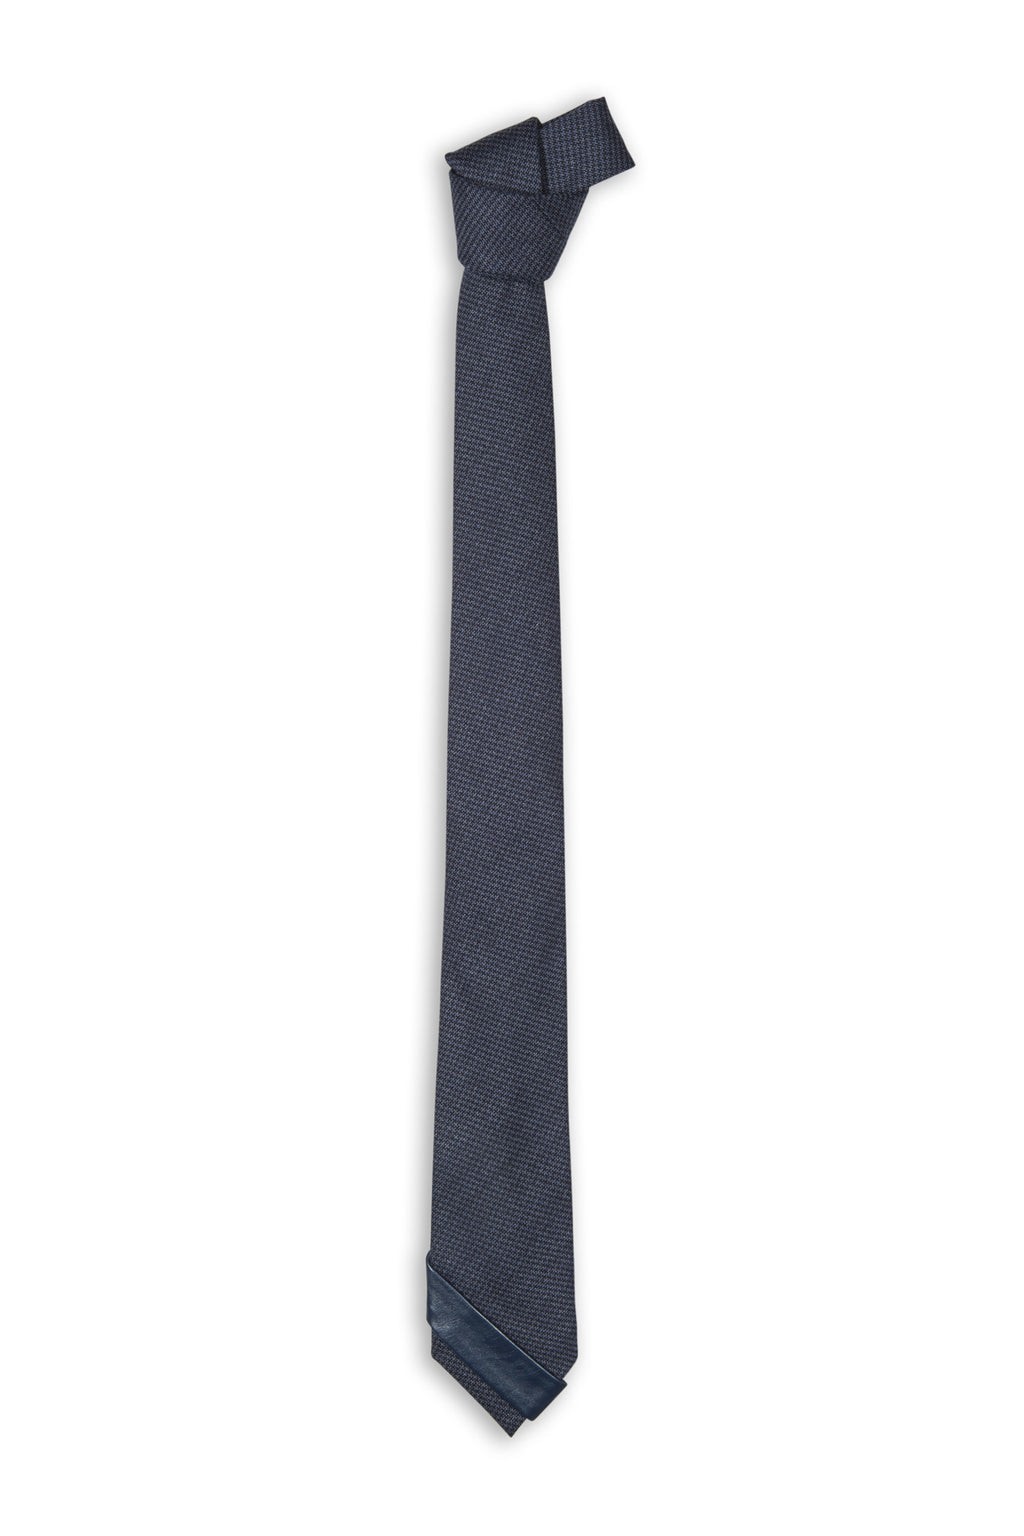 Cravate fait main avec cuir - Original handmade tie with leather